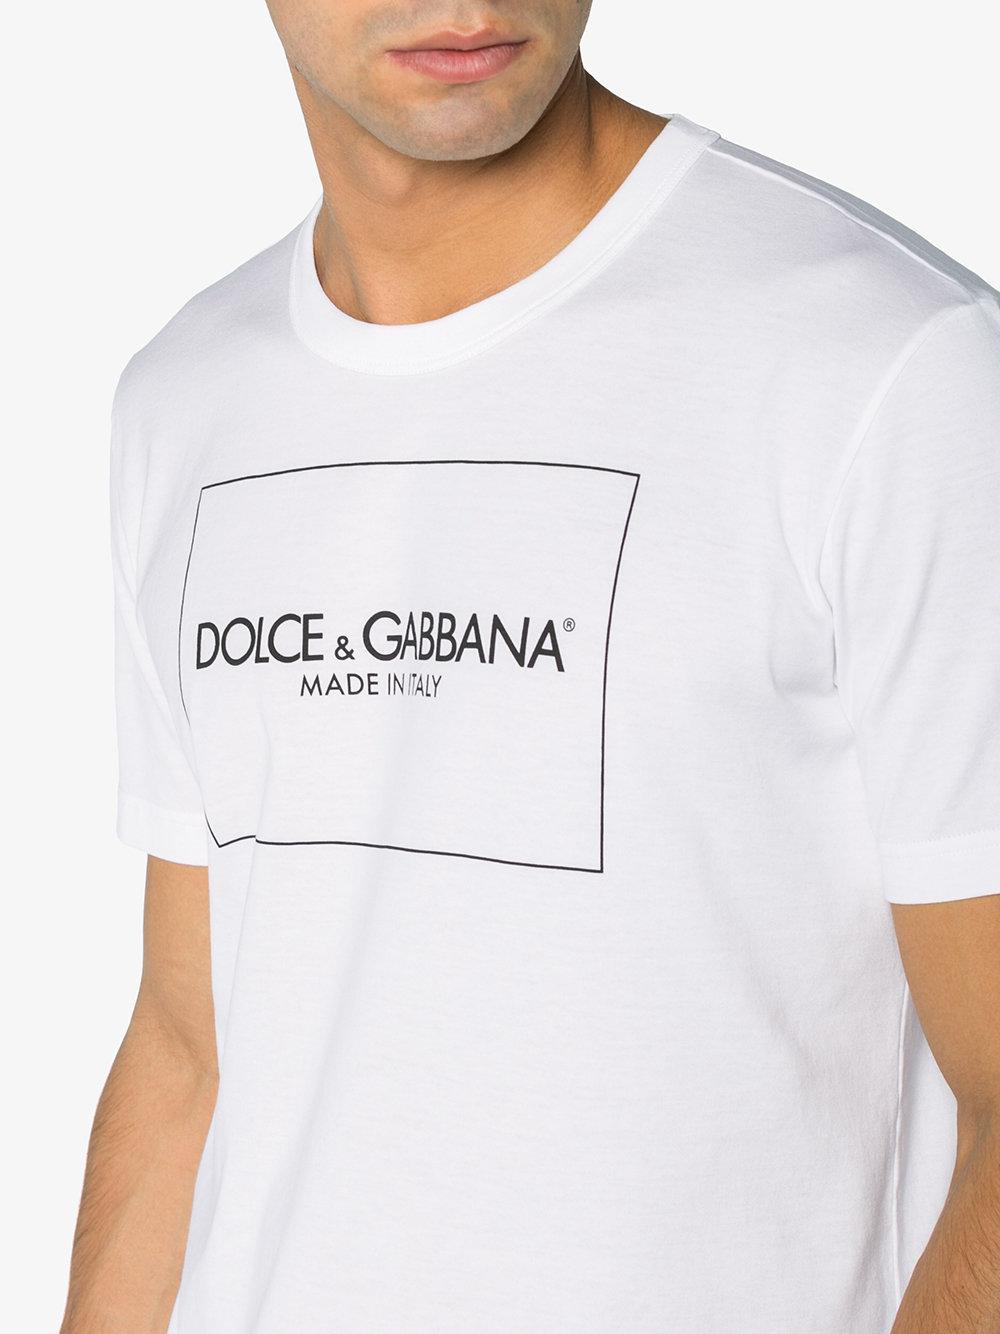 Dolce & Gabbana Cotton Box Logo T Shirt in White for Men - Lyst